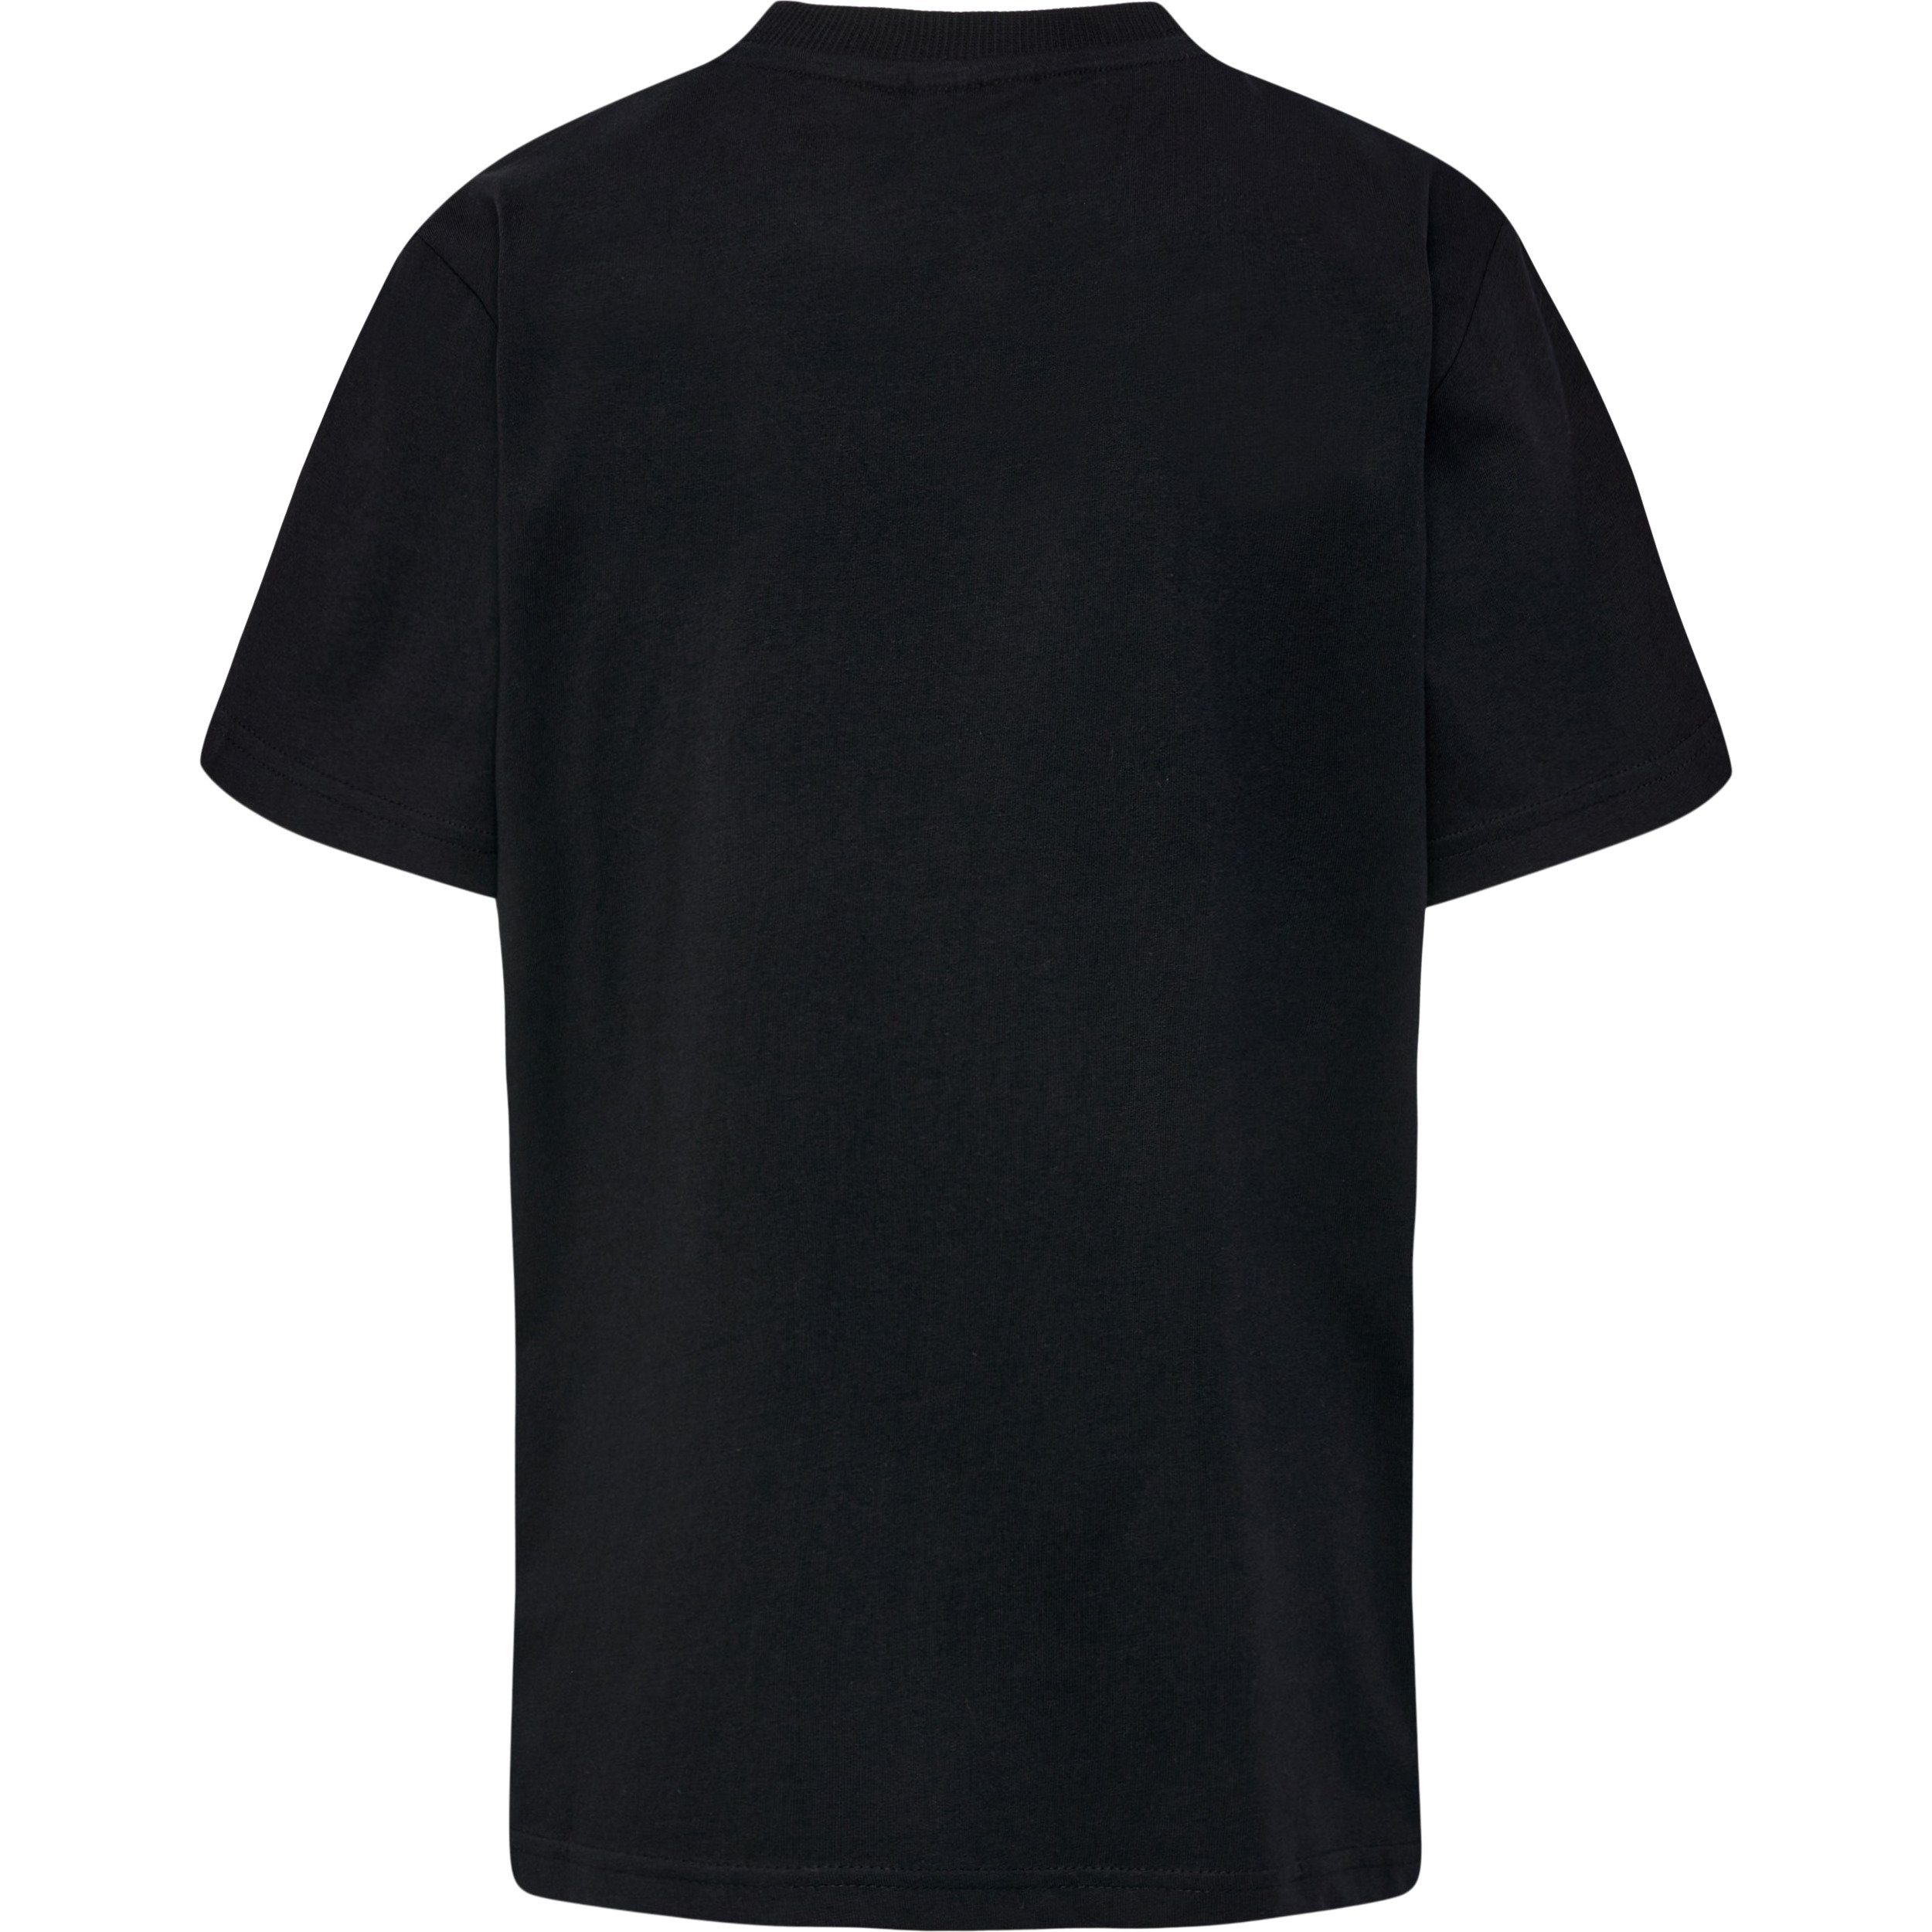 - black Kinder T-SHIRT hummel T-Shirt für DARE Short Sleeve